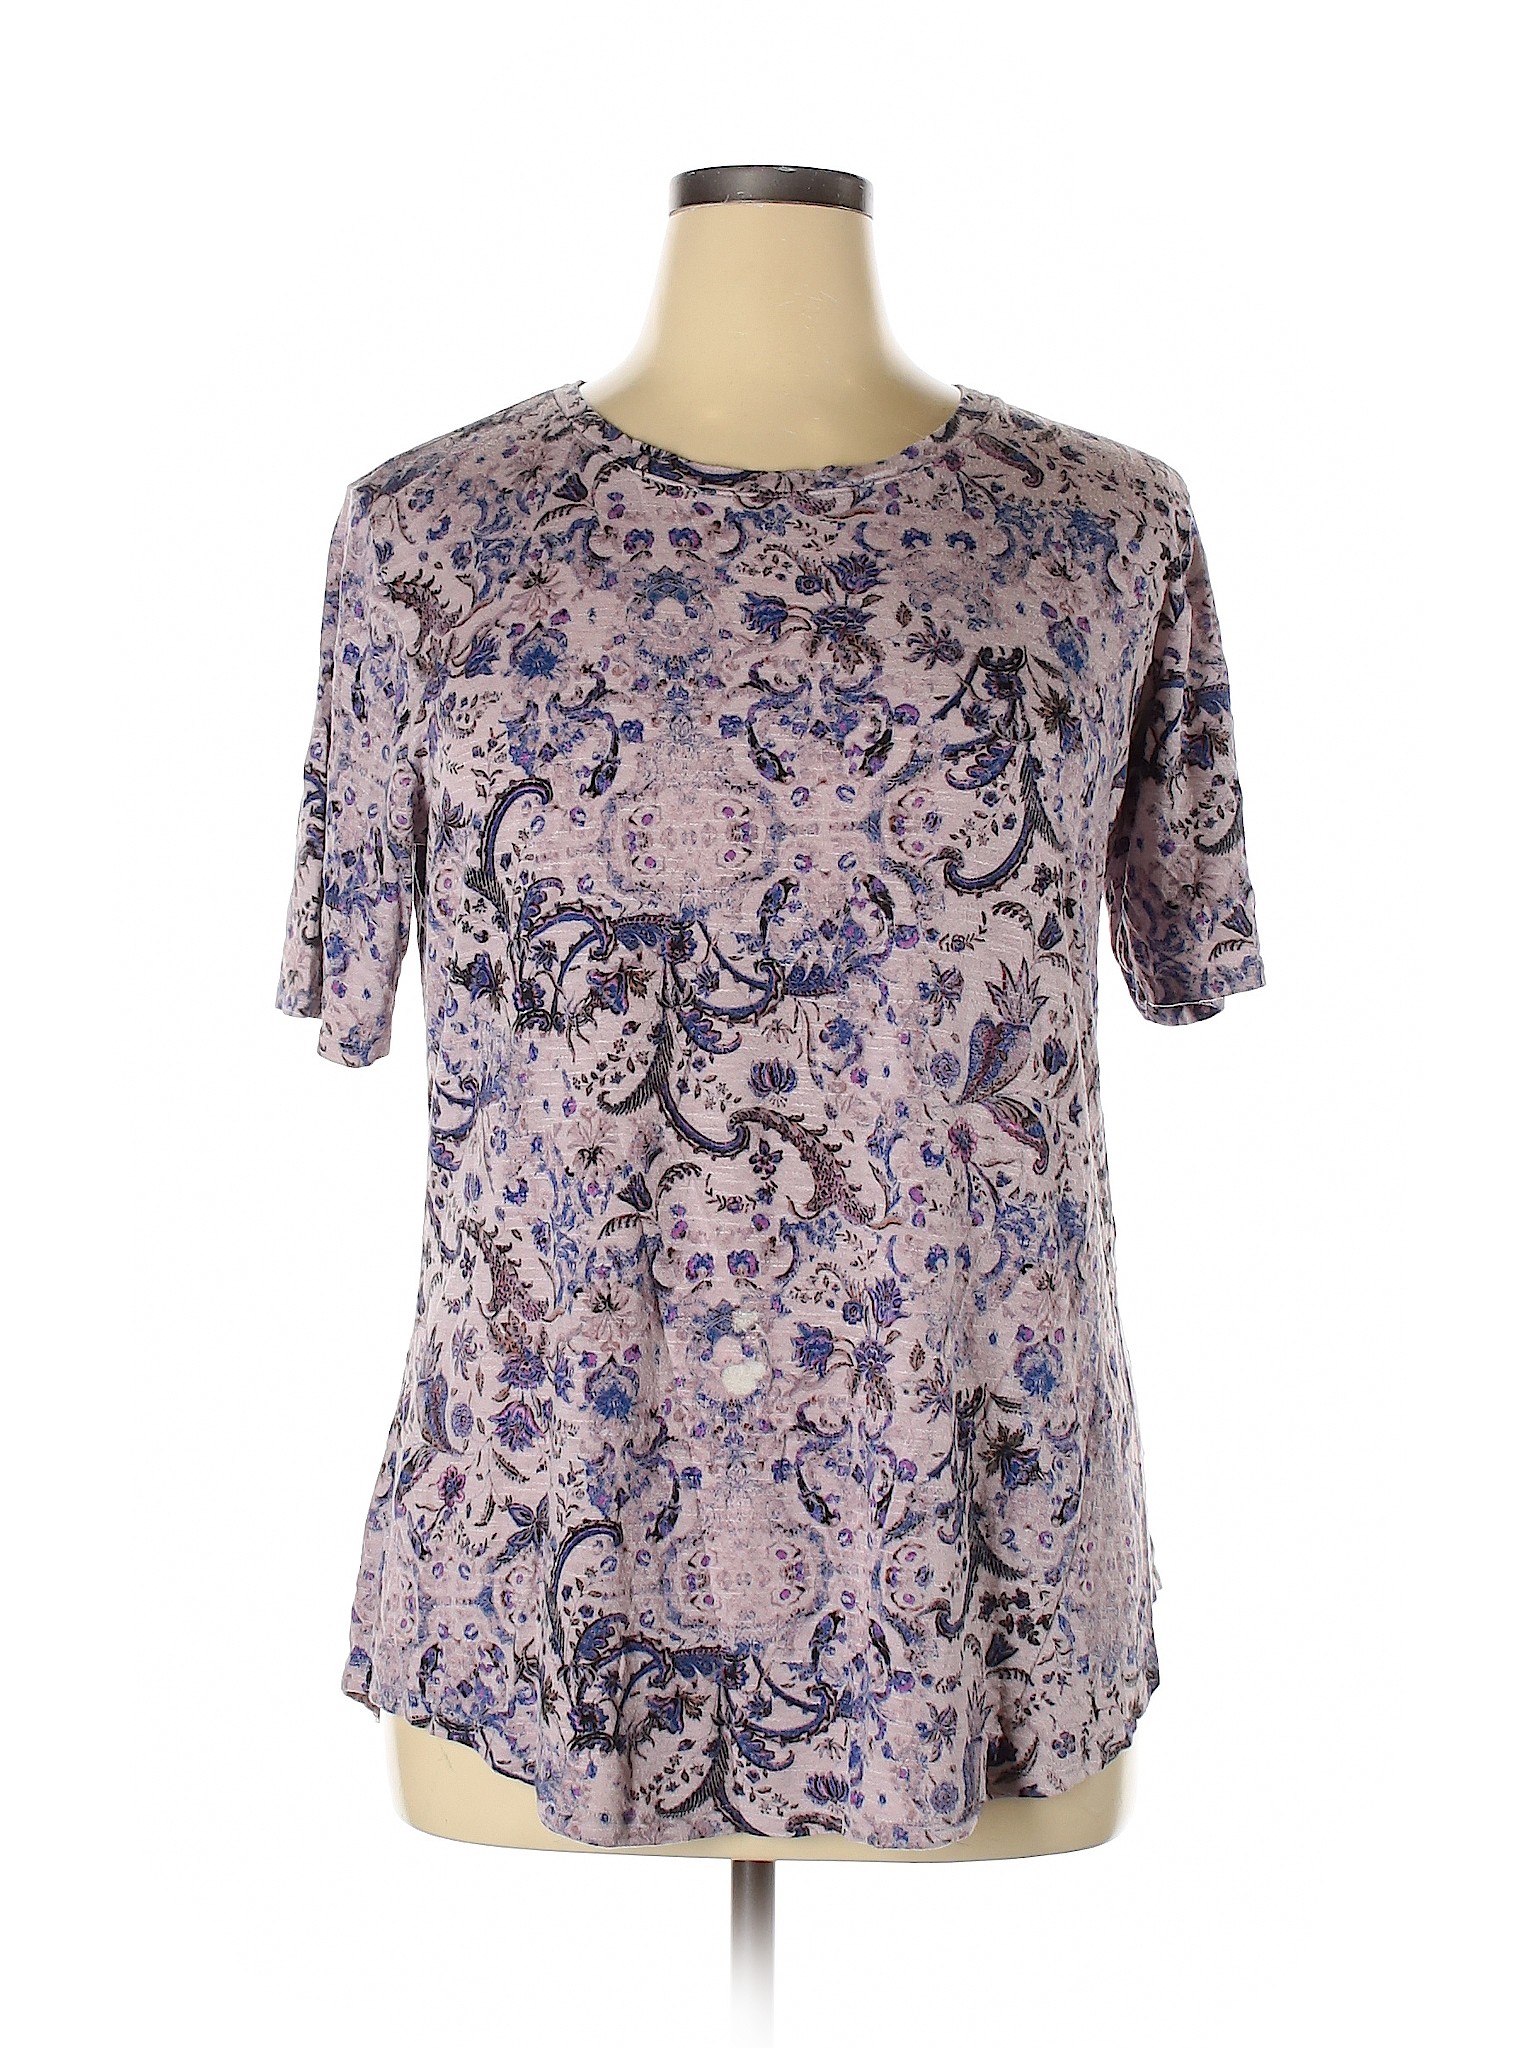 Maurices Women Purple Short Sleeve Top XL | eBay